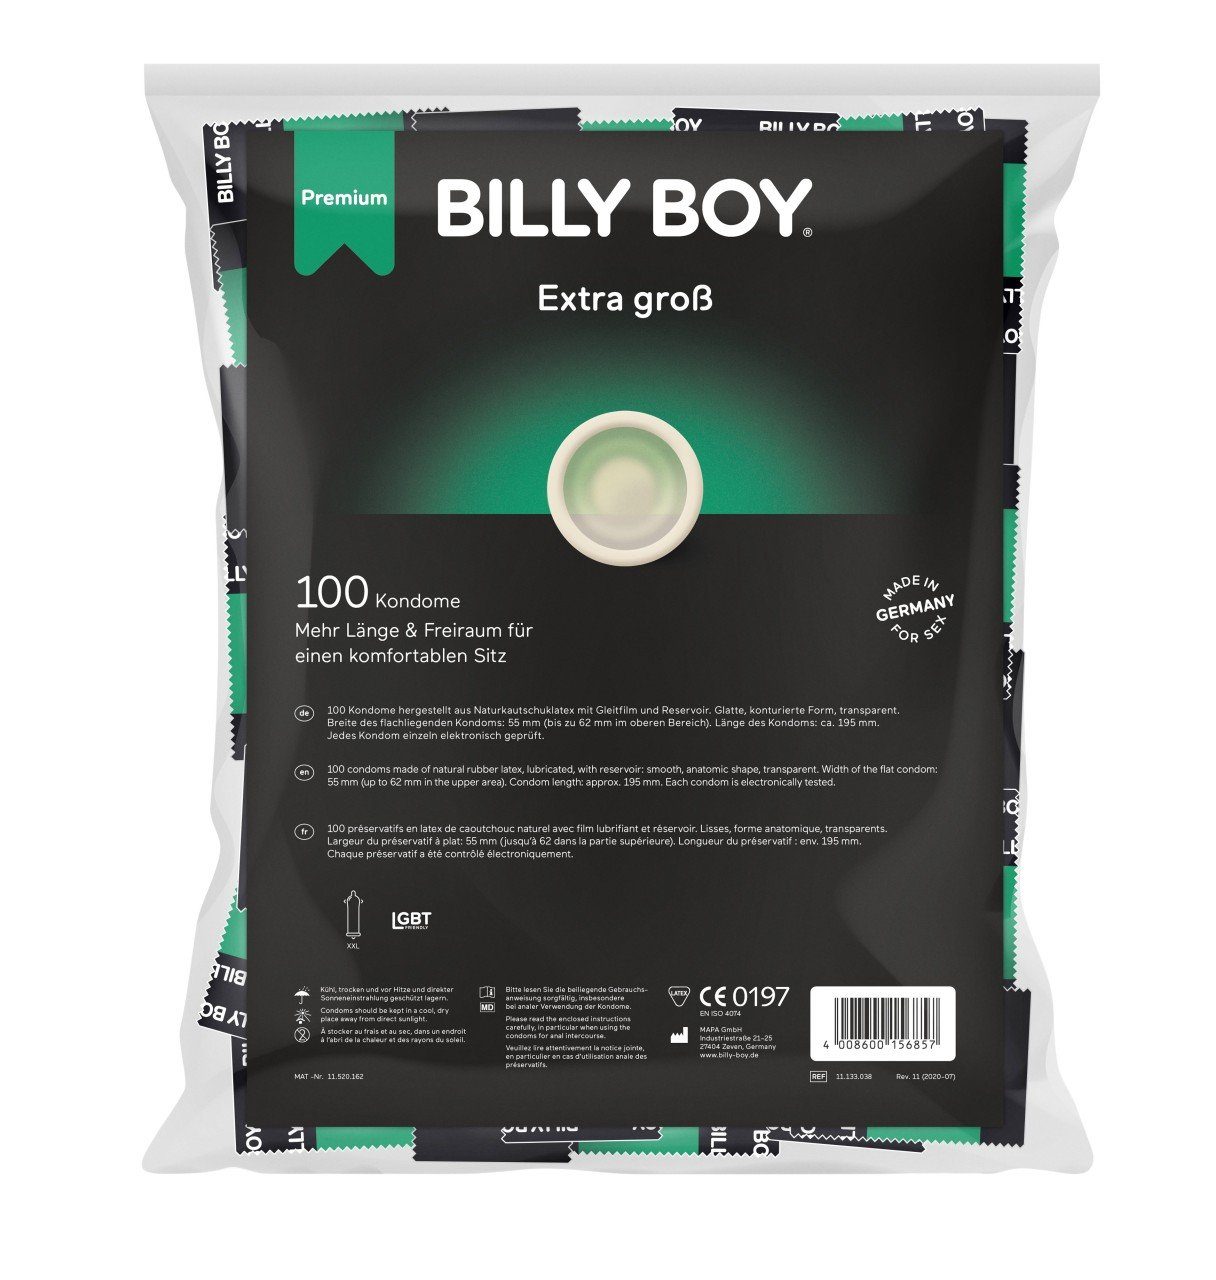 Einhand-Kondome 100er Billy XXL Boy Btl. BOY BILLY